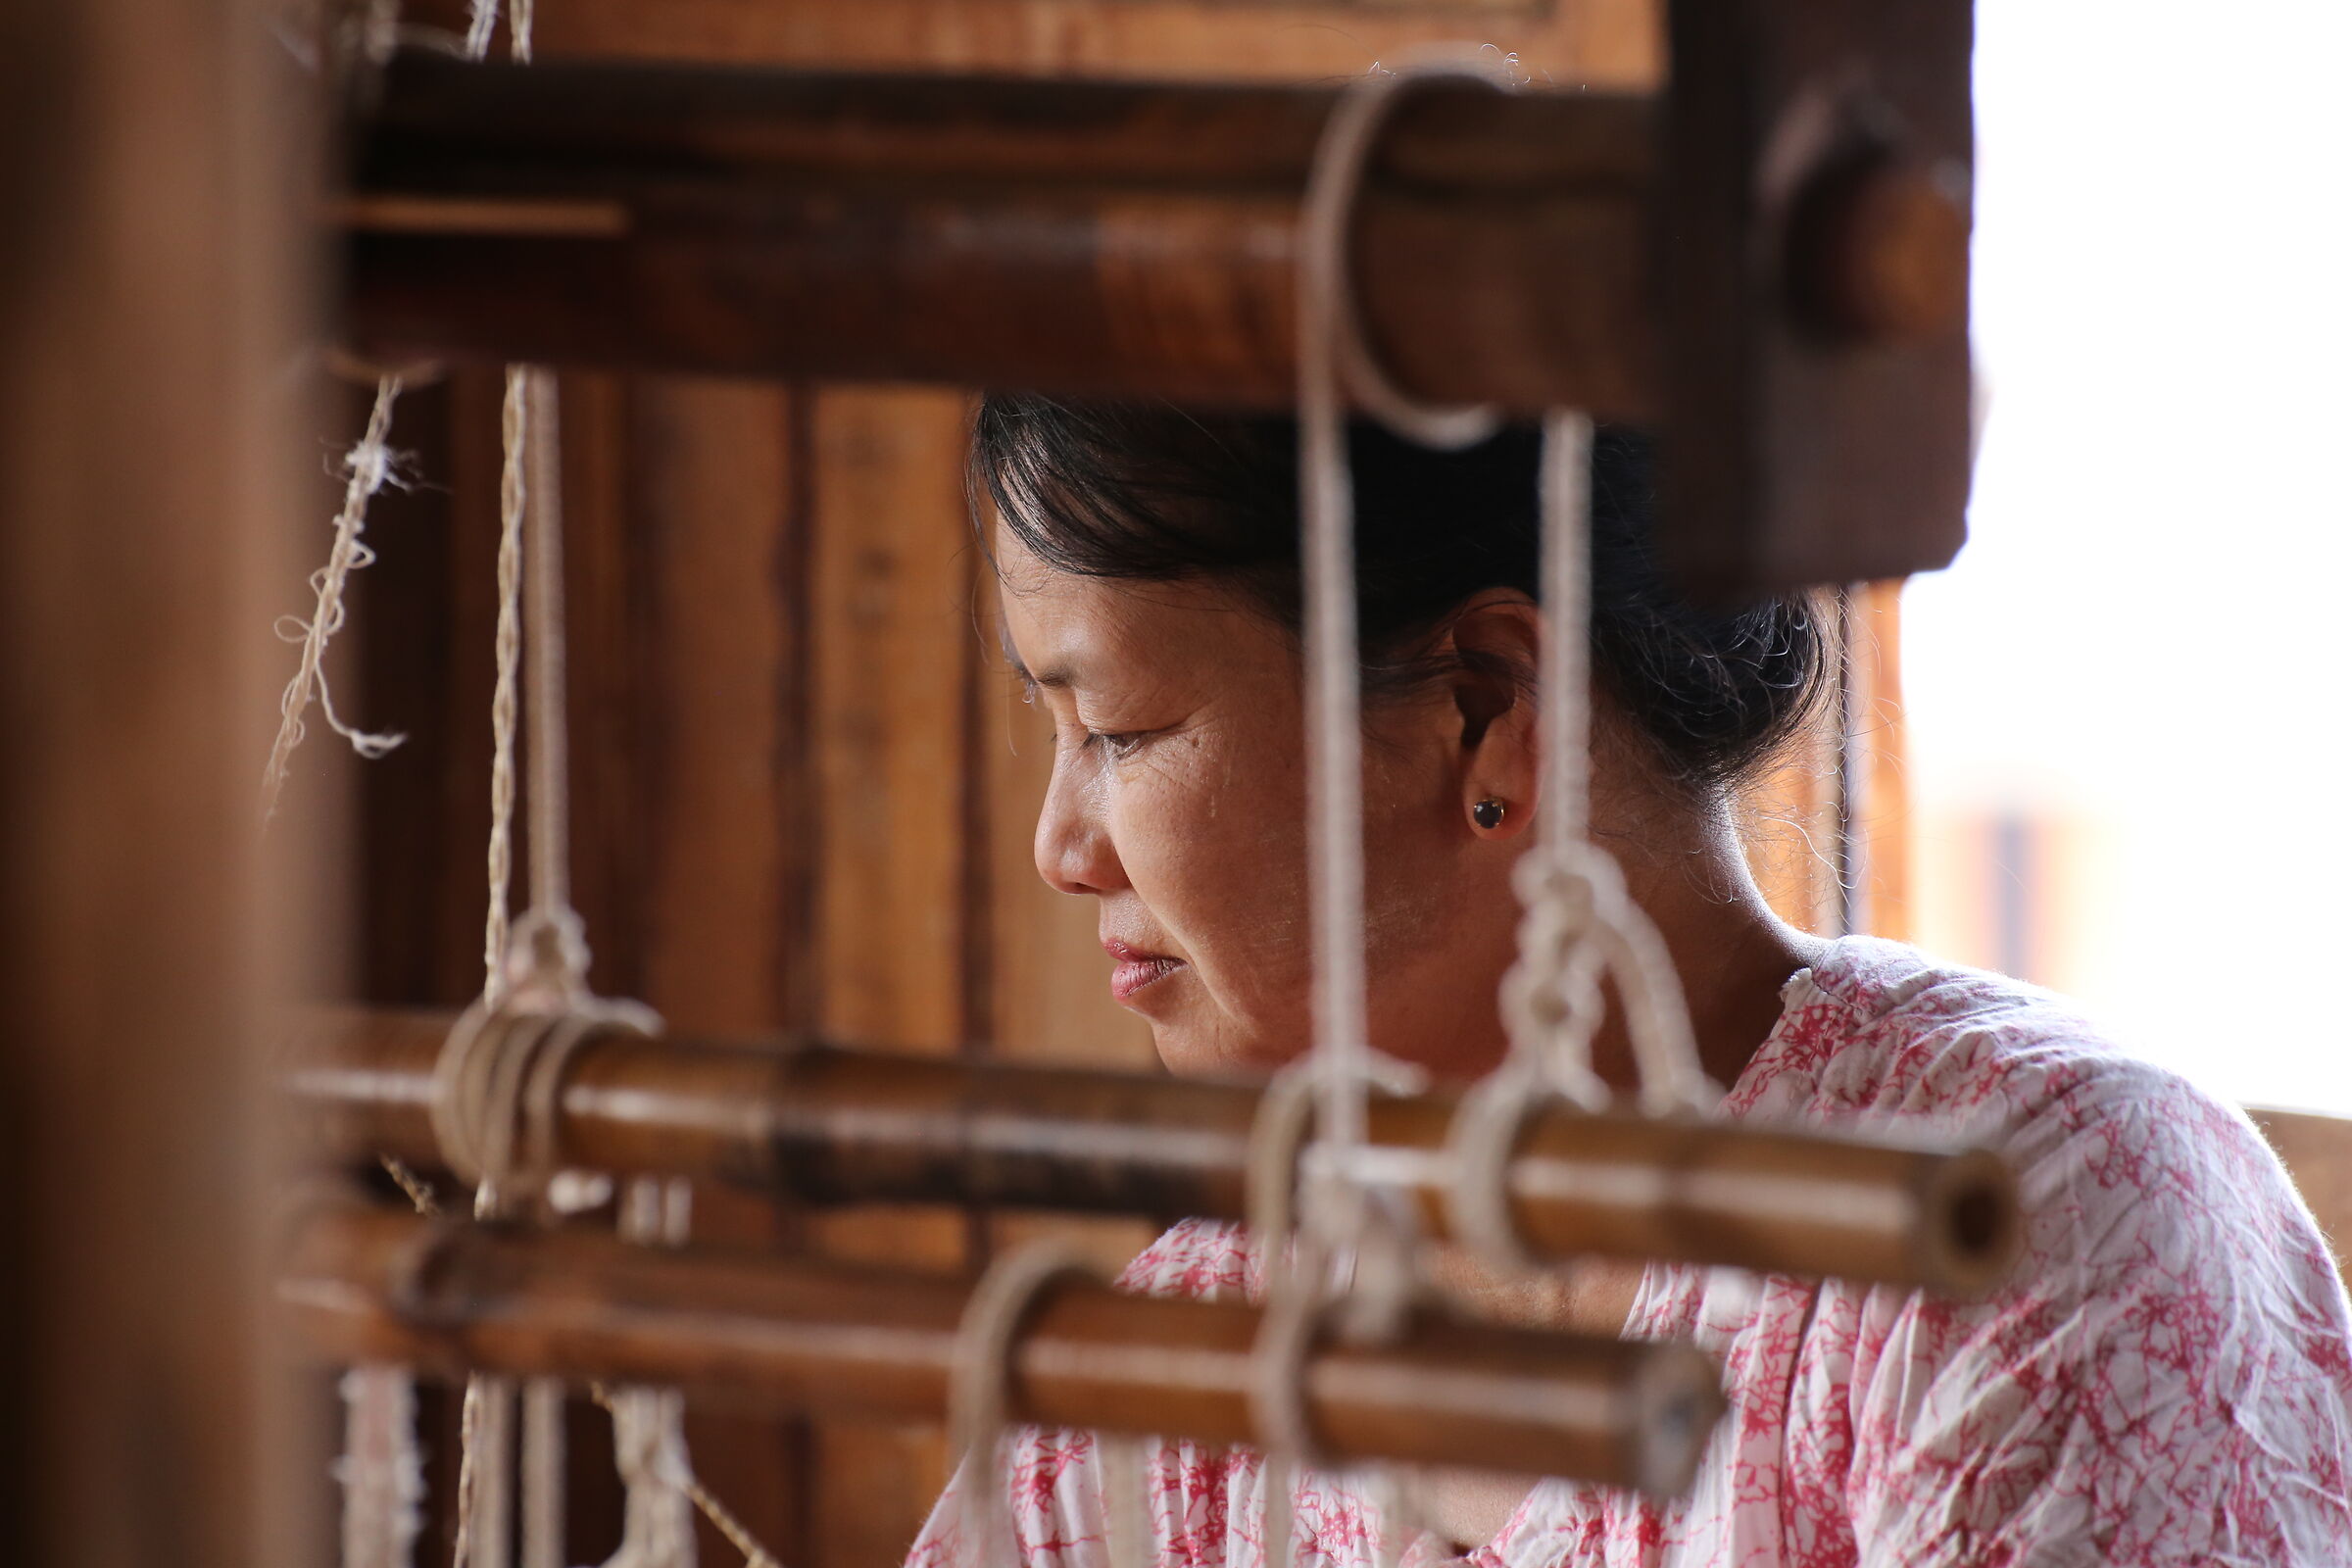 Tessitrice di seta in Myanmar...